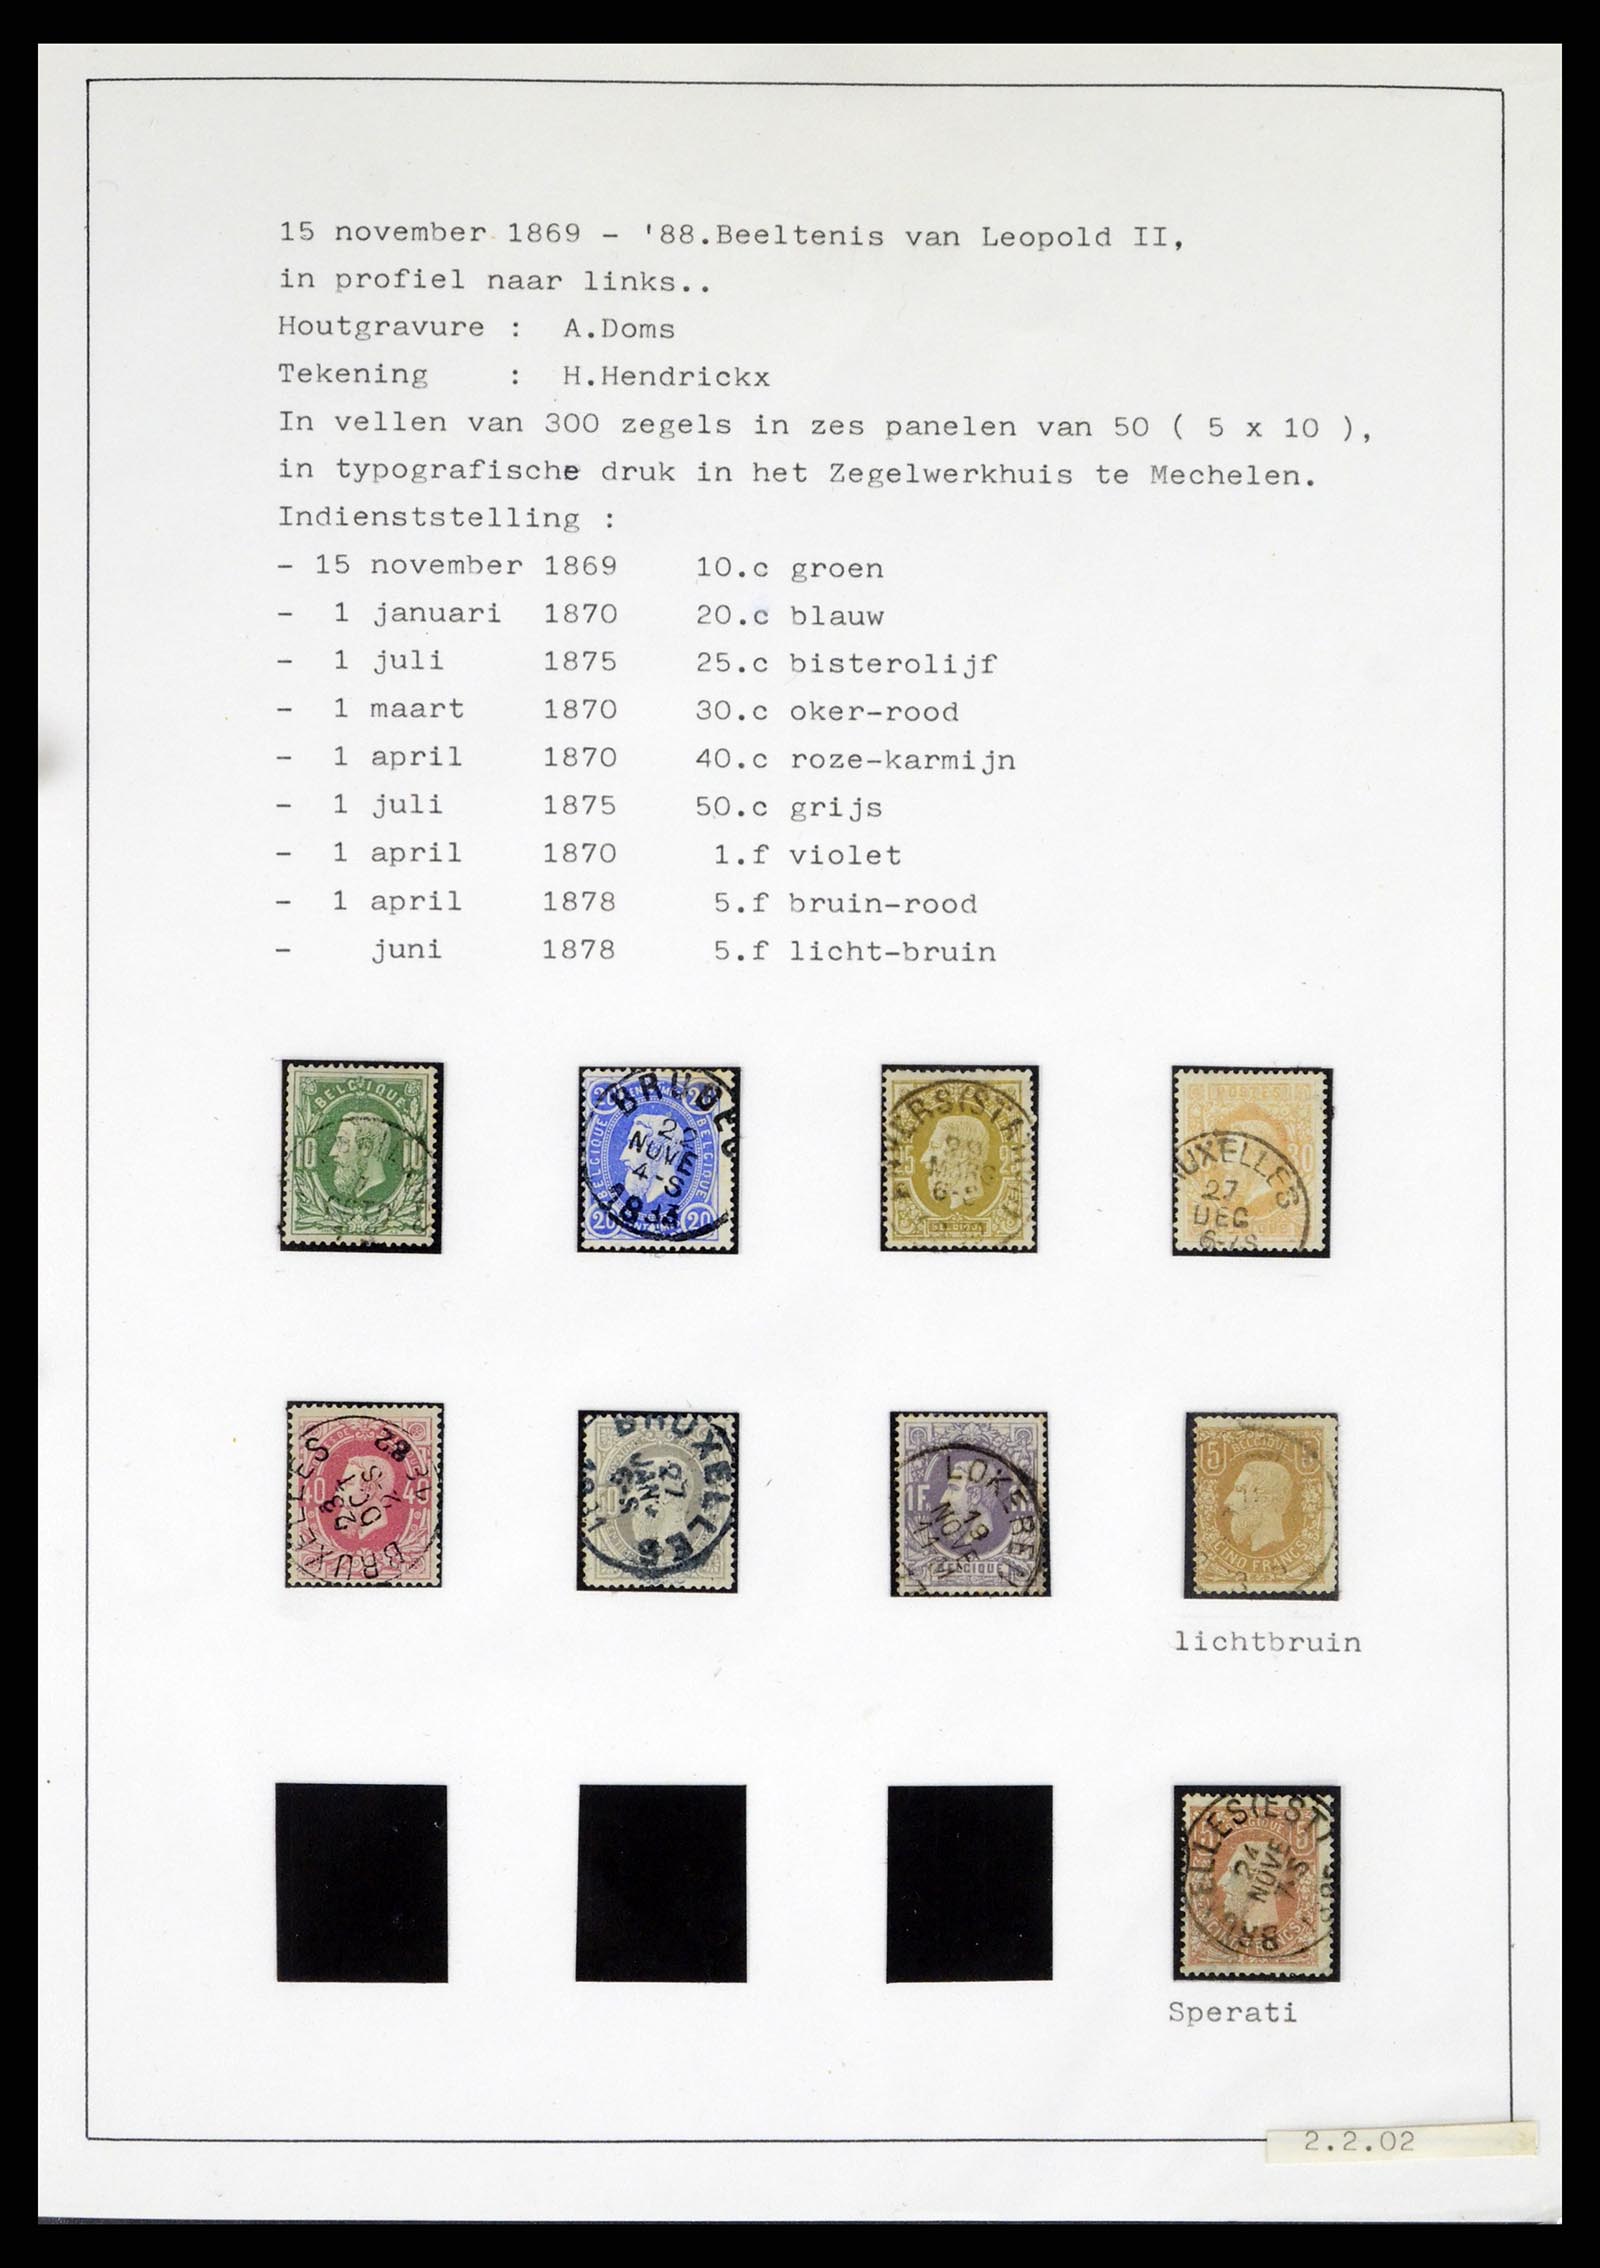 38033 0016 - Stamp collection 38033 Belgiùm classic 1849-1905.